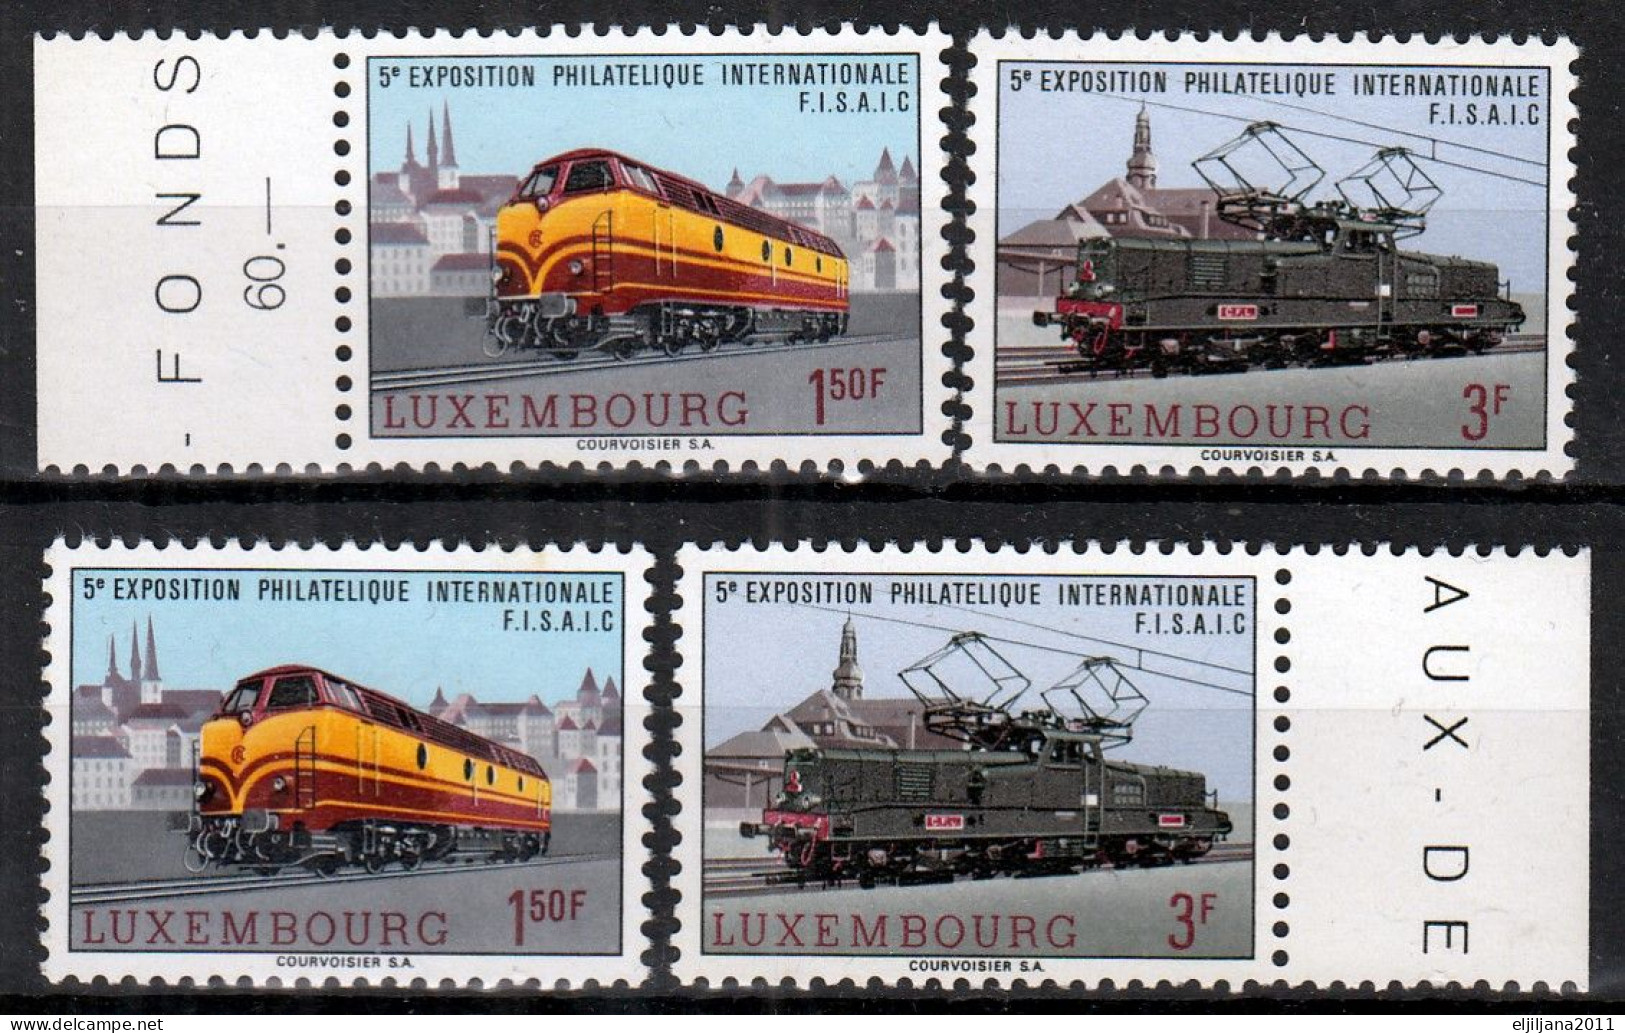 ⁕ LUXEMBOURG 1966 ⁕ Philatelic Exhibition FISAIC Railway Workers Philatelists Mi.735-736 X2⁕ 4v MNH - Nuovi